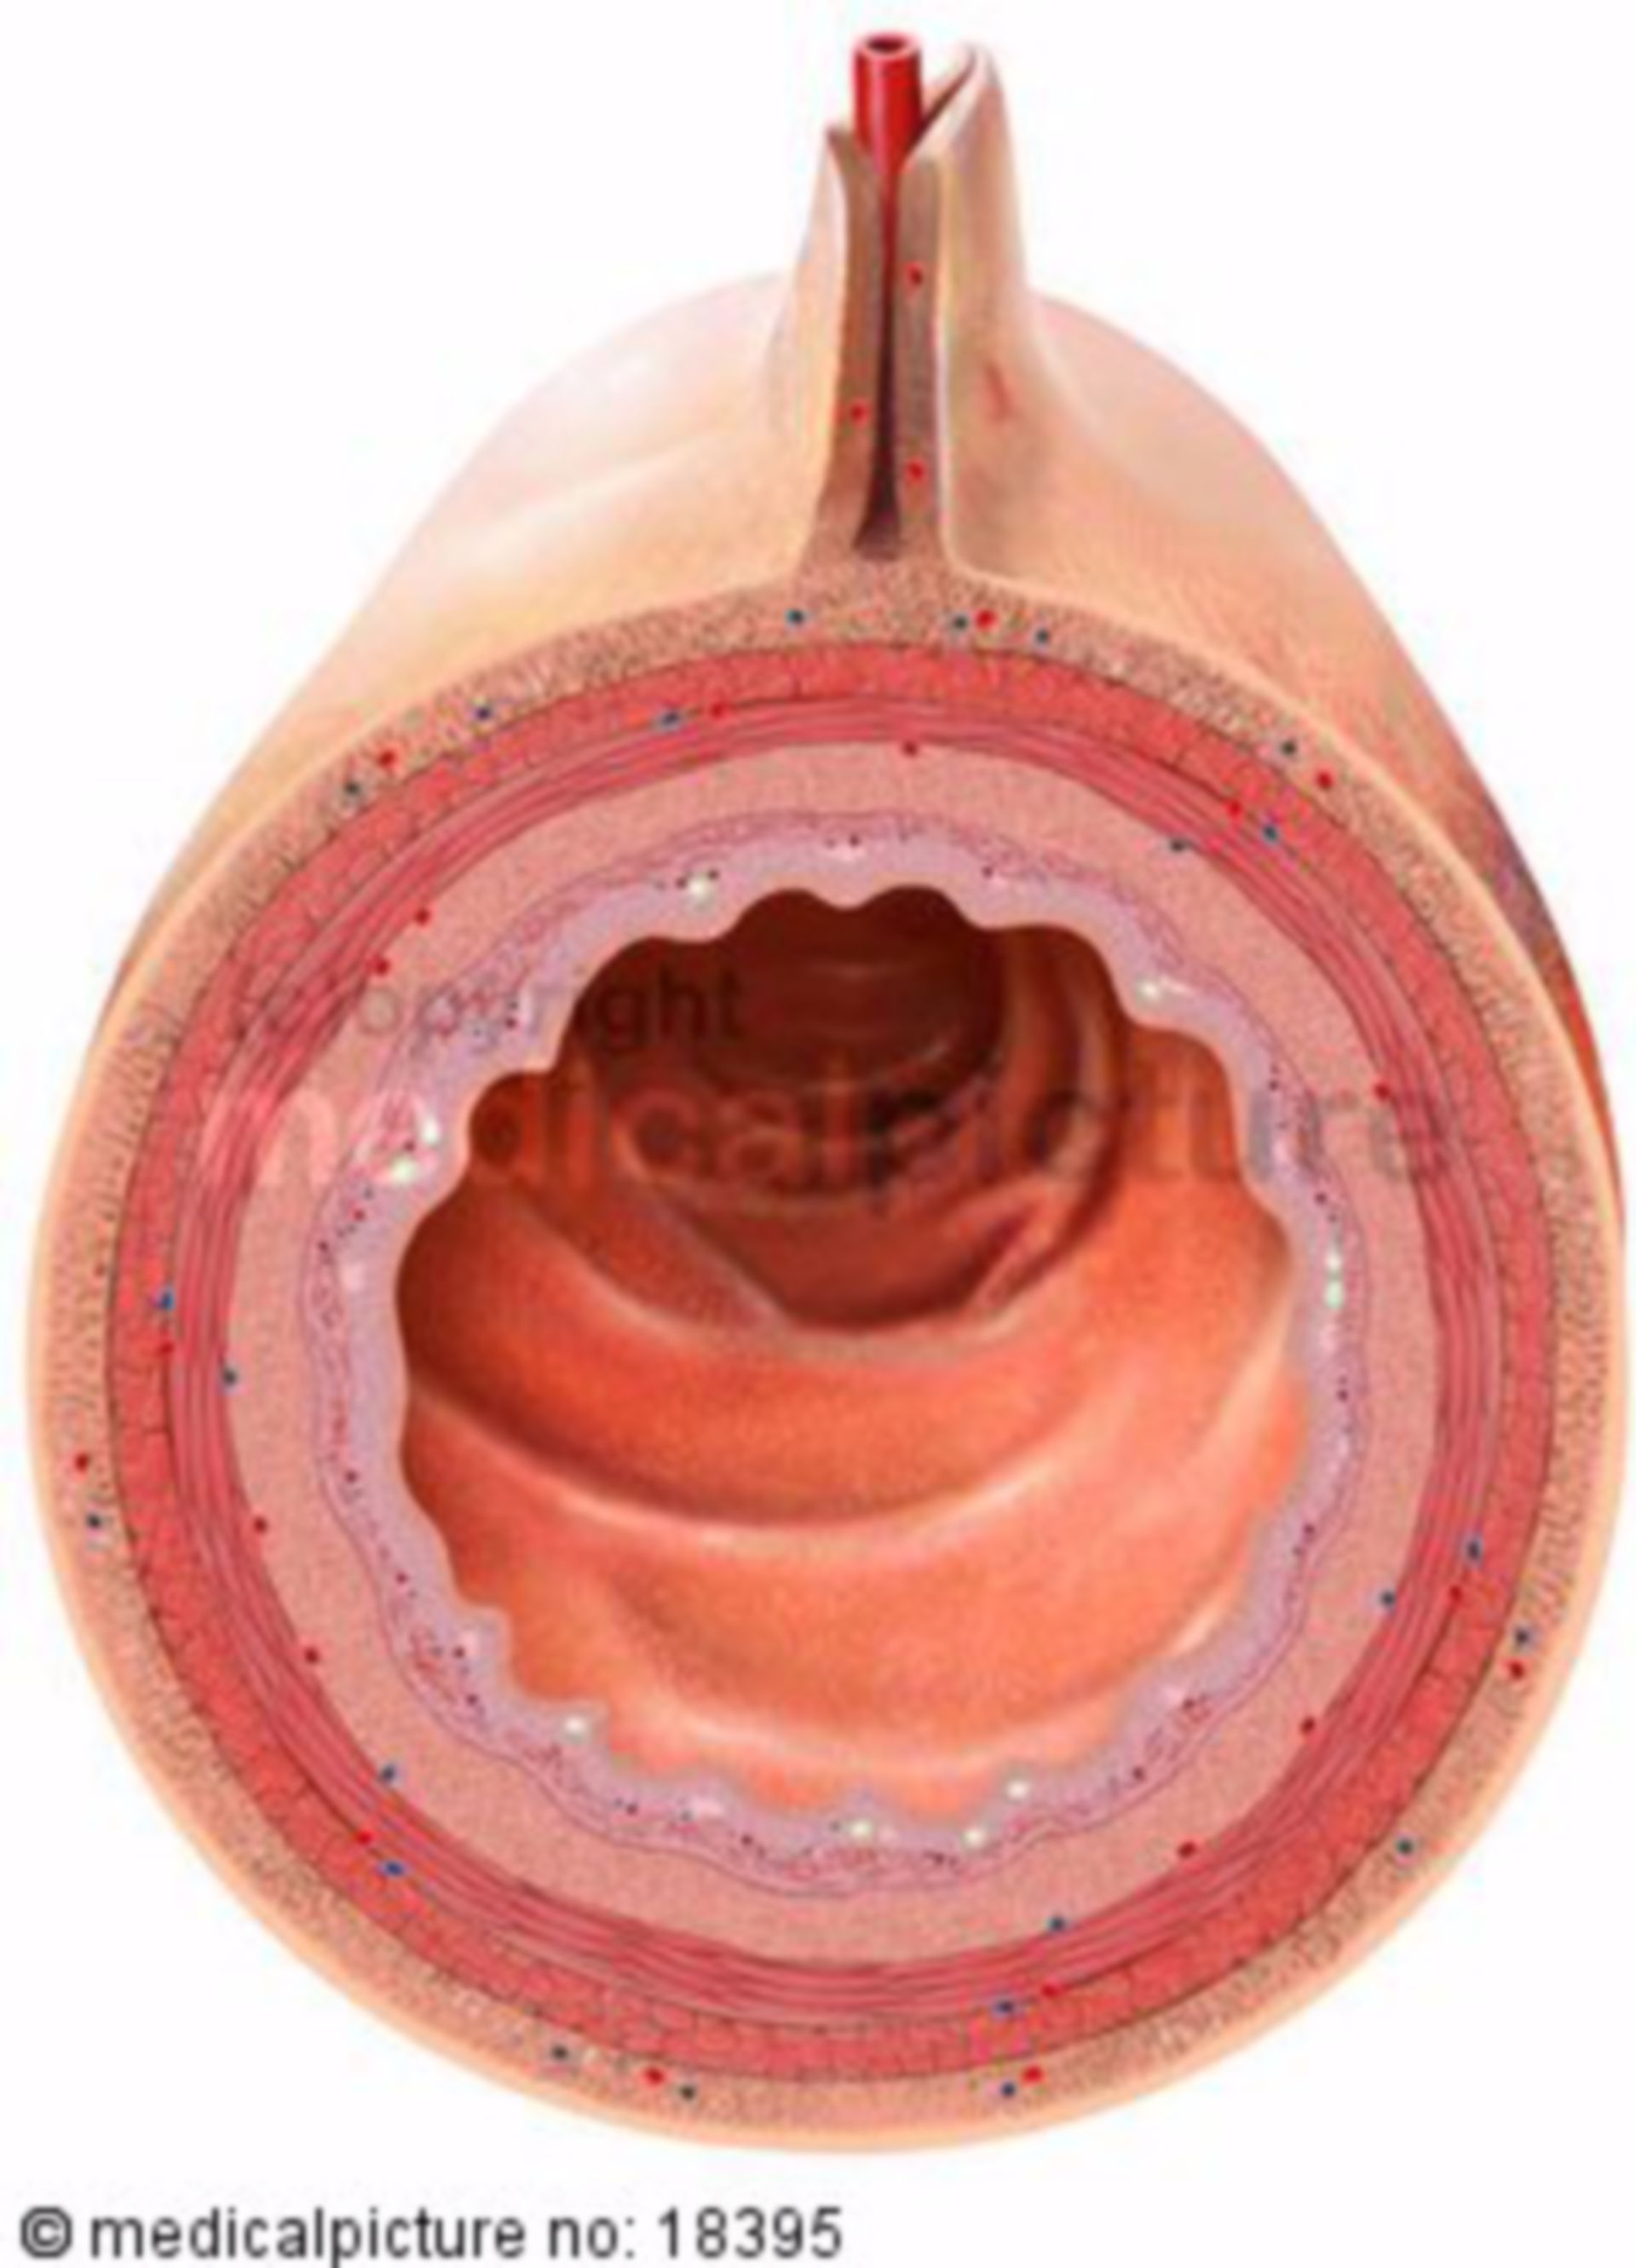 Lumen of the small intestine, ileum